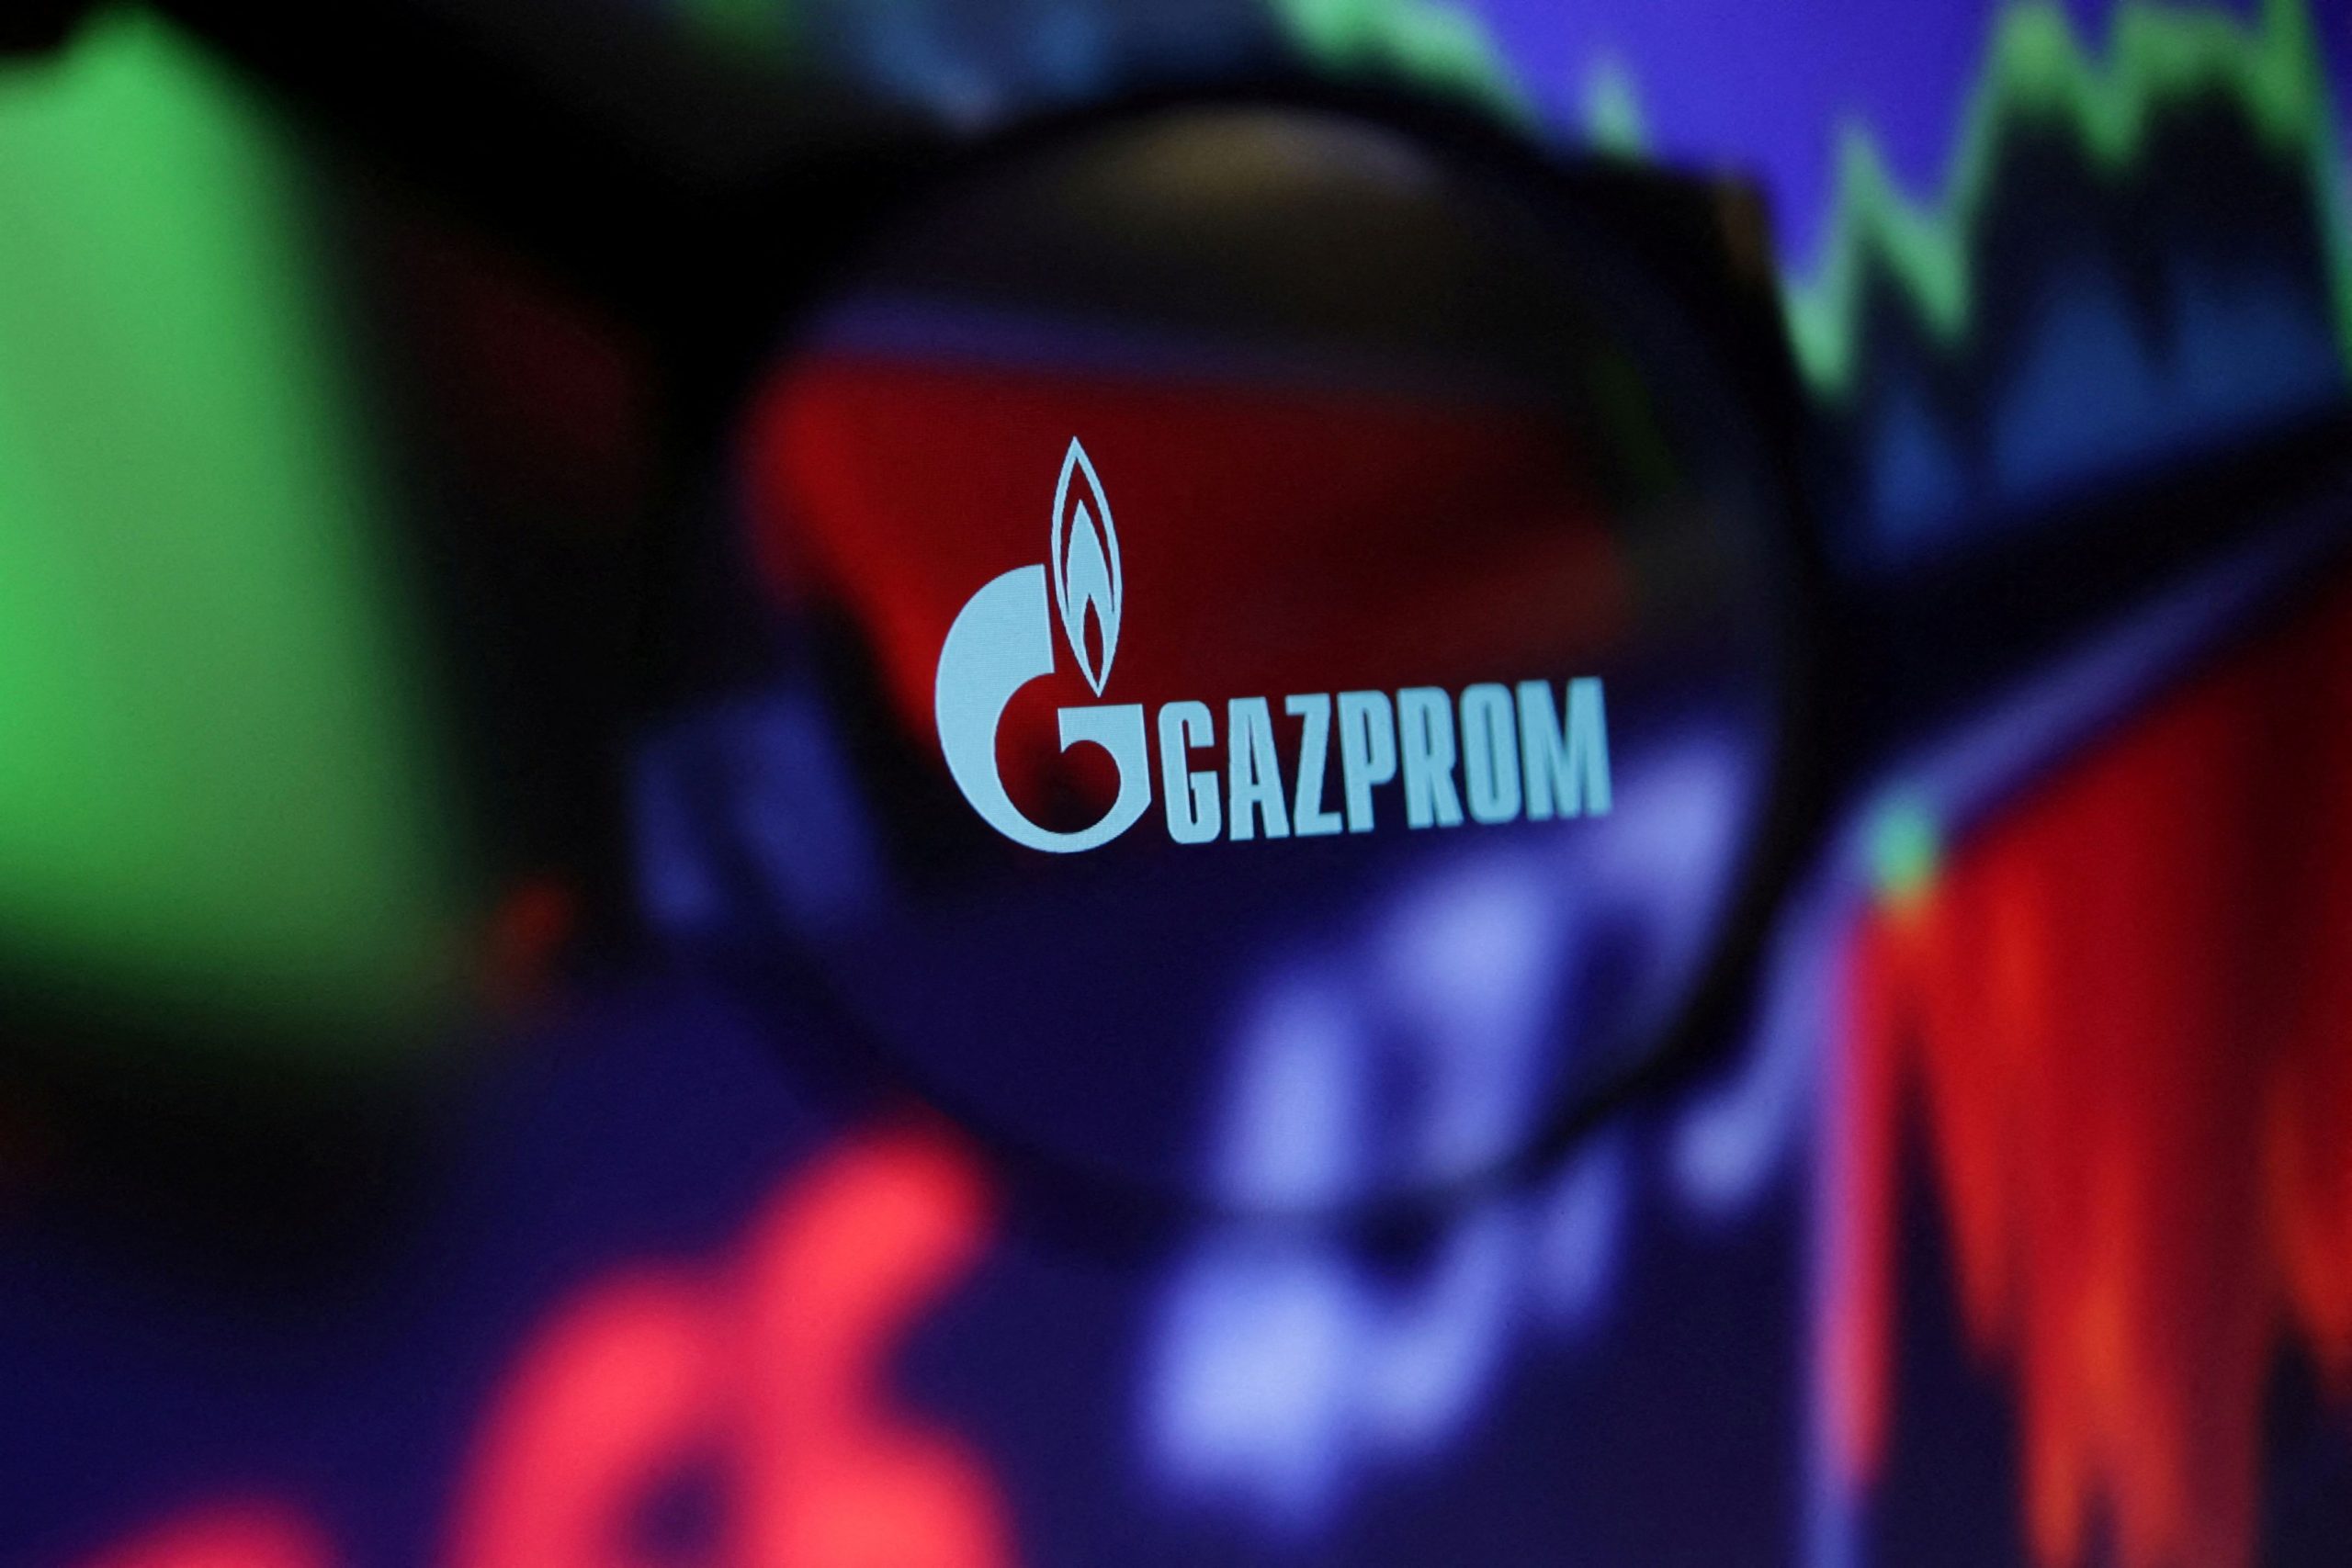 Gazprom: Εφοδιάζει την Ευρώπη με αέριο μέσω της Ουκρανίας